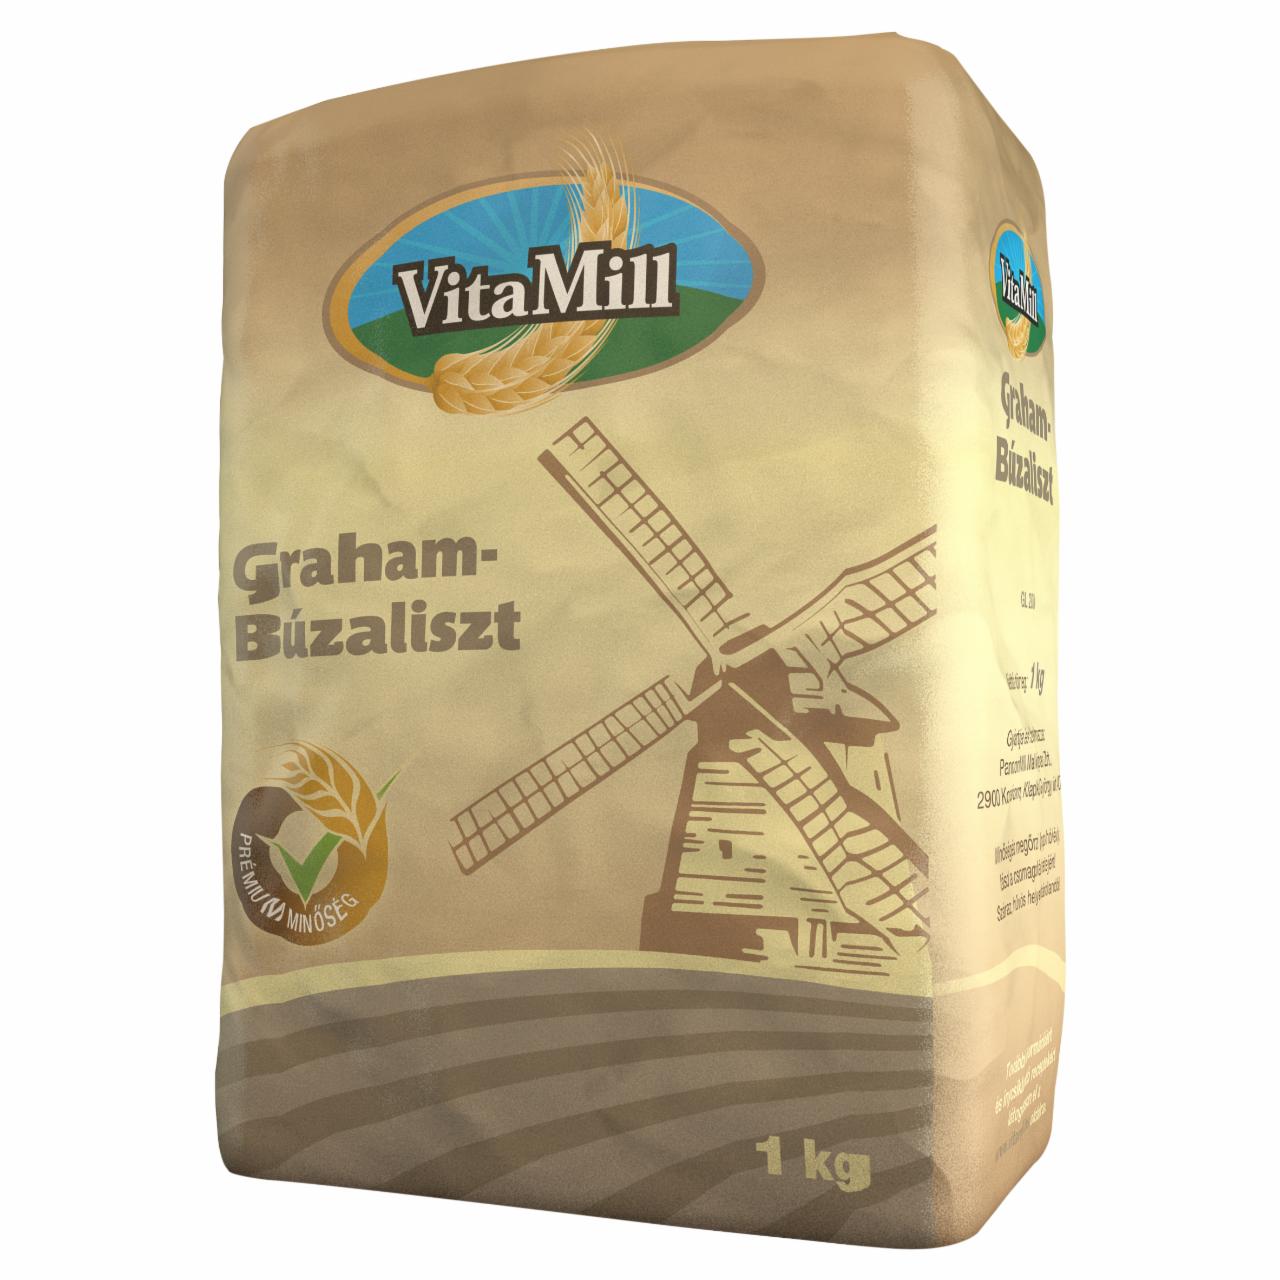 Képek - VitaMill Graham búzaliszt 1 kg